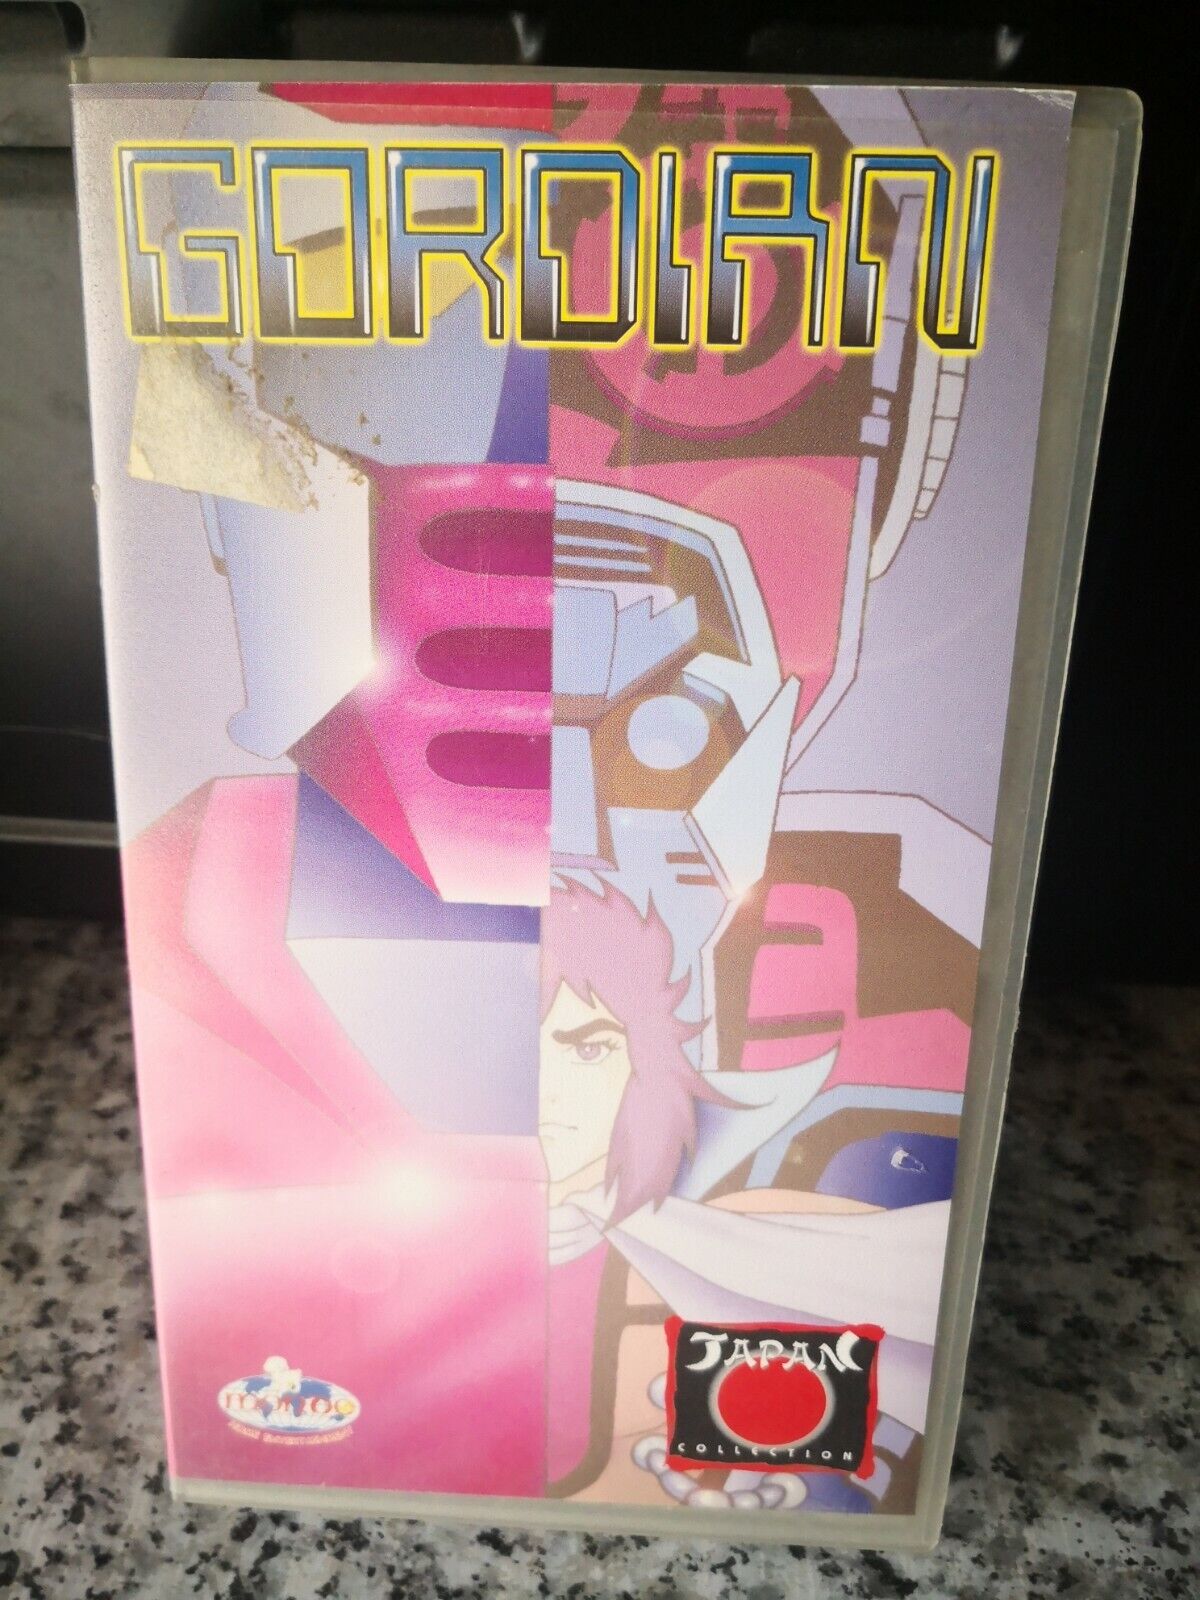 Gordian VHS Cartoni Japan Collection Vol.1 -2002 -F